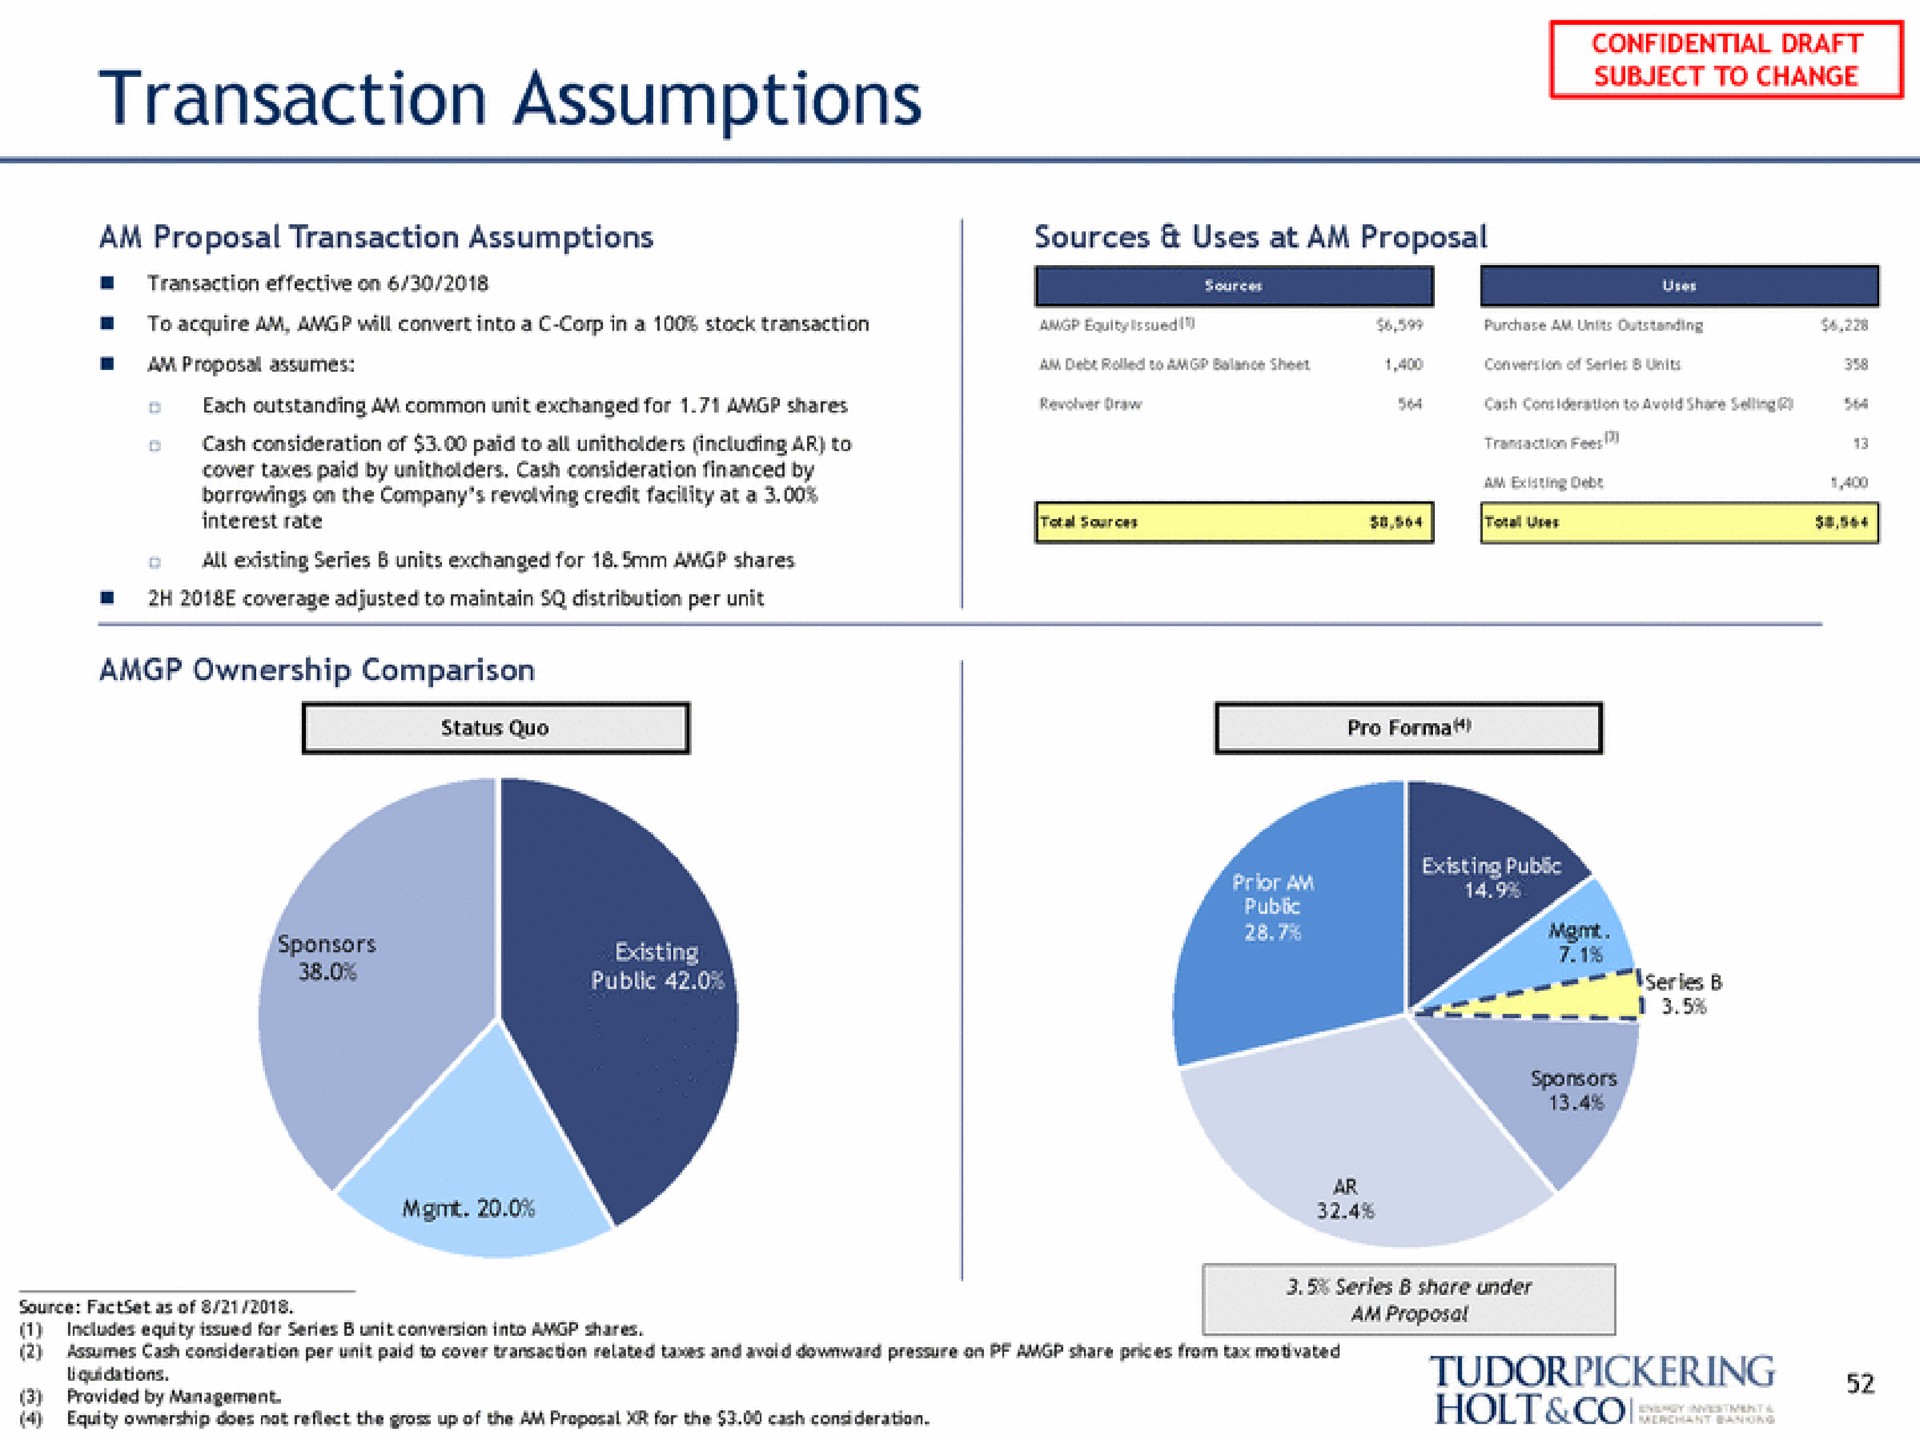 transaction assumptions | Tudor, Pickering, Holt & Co